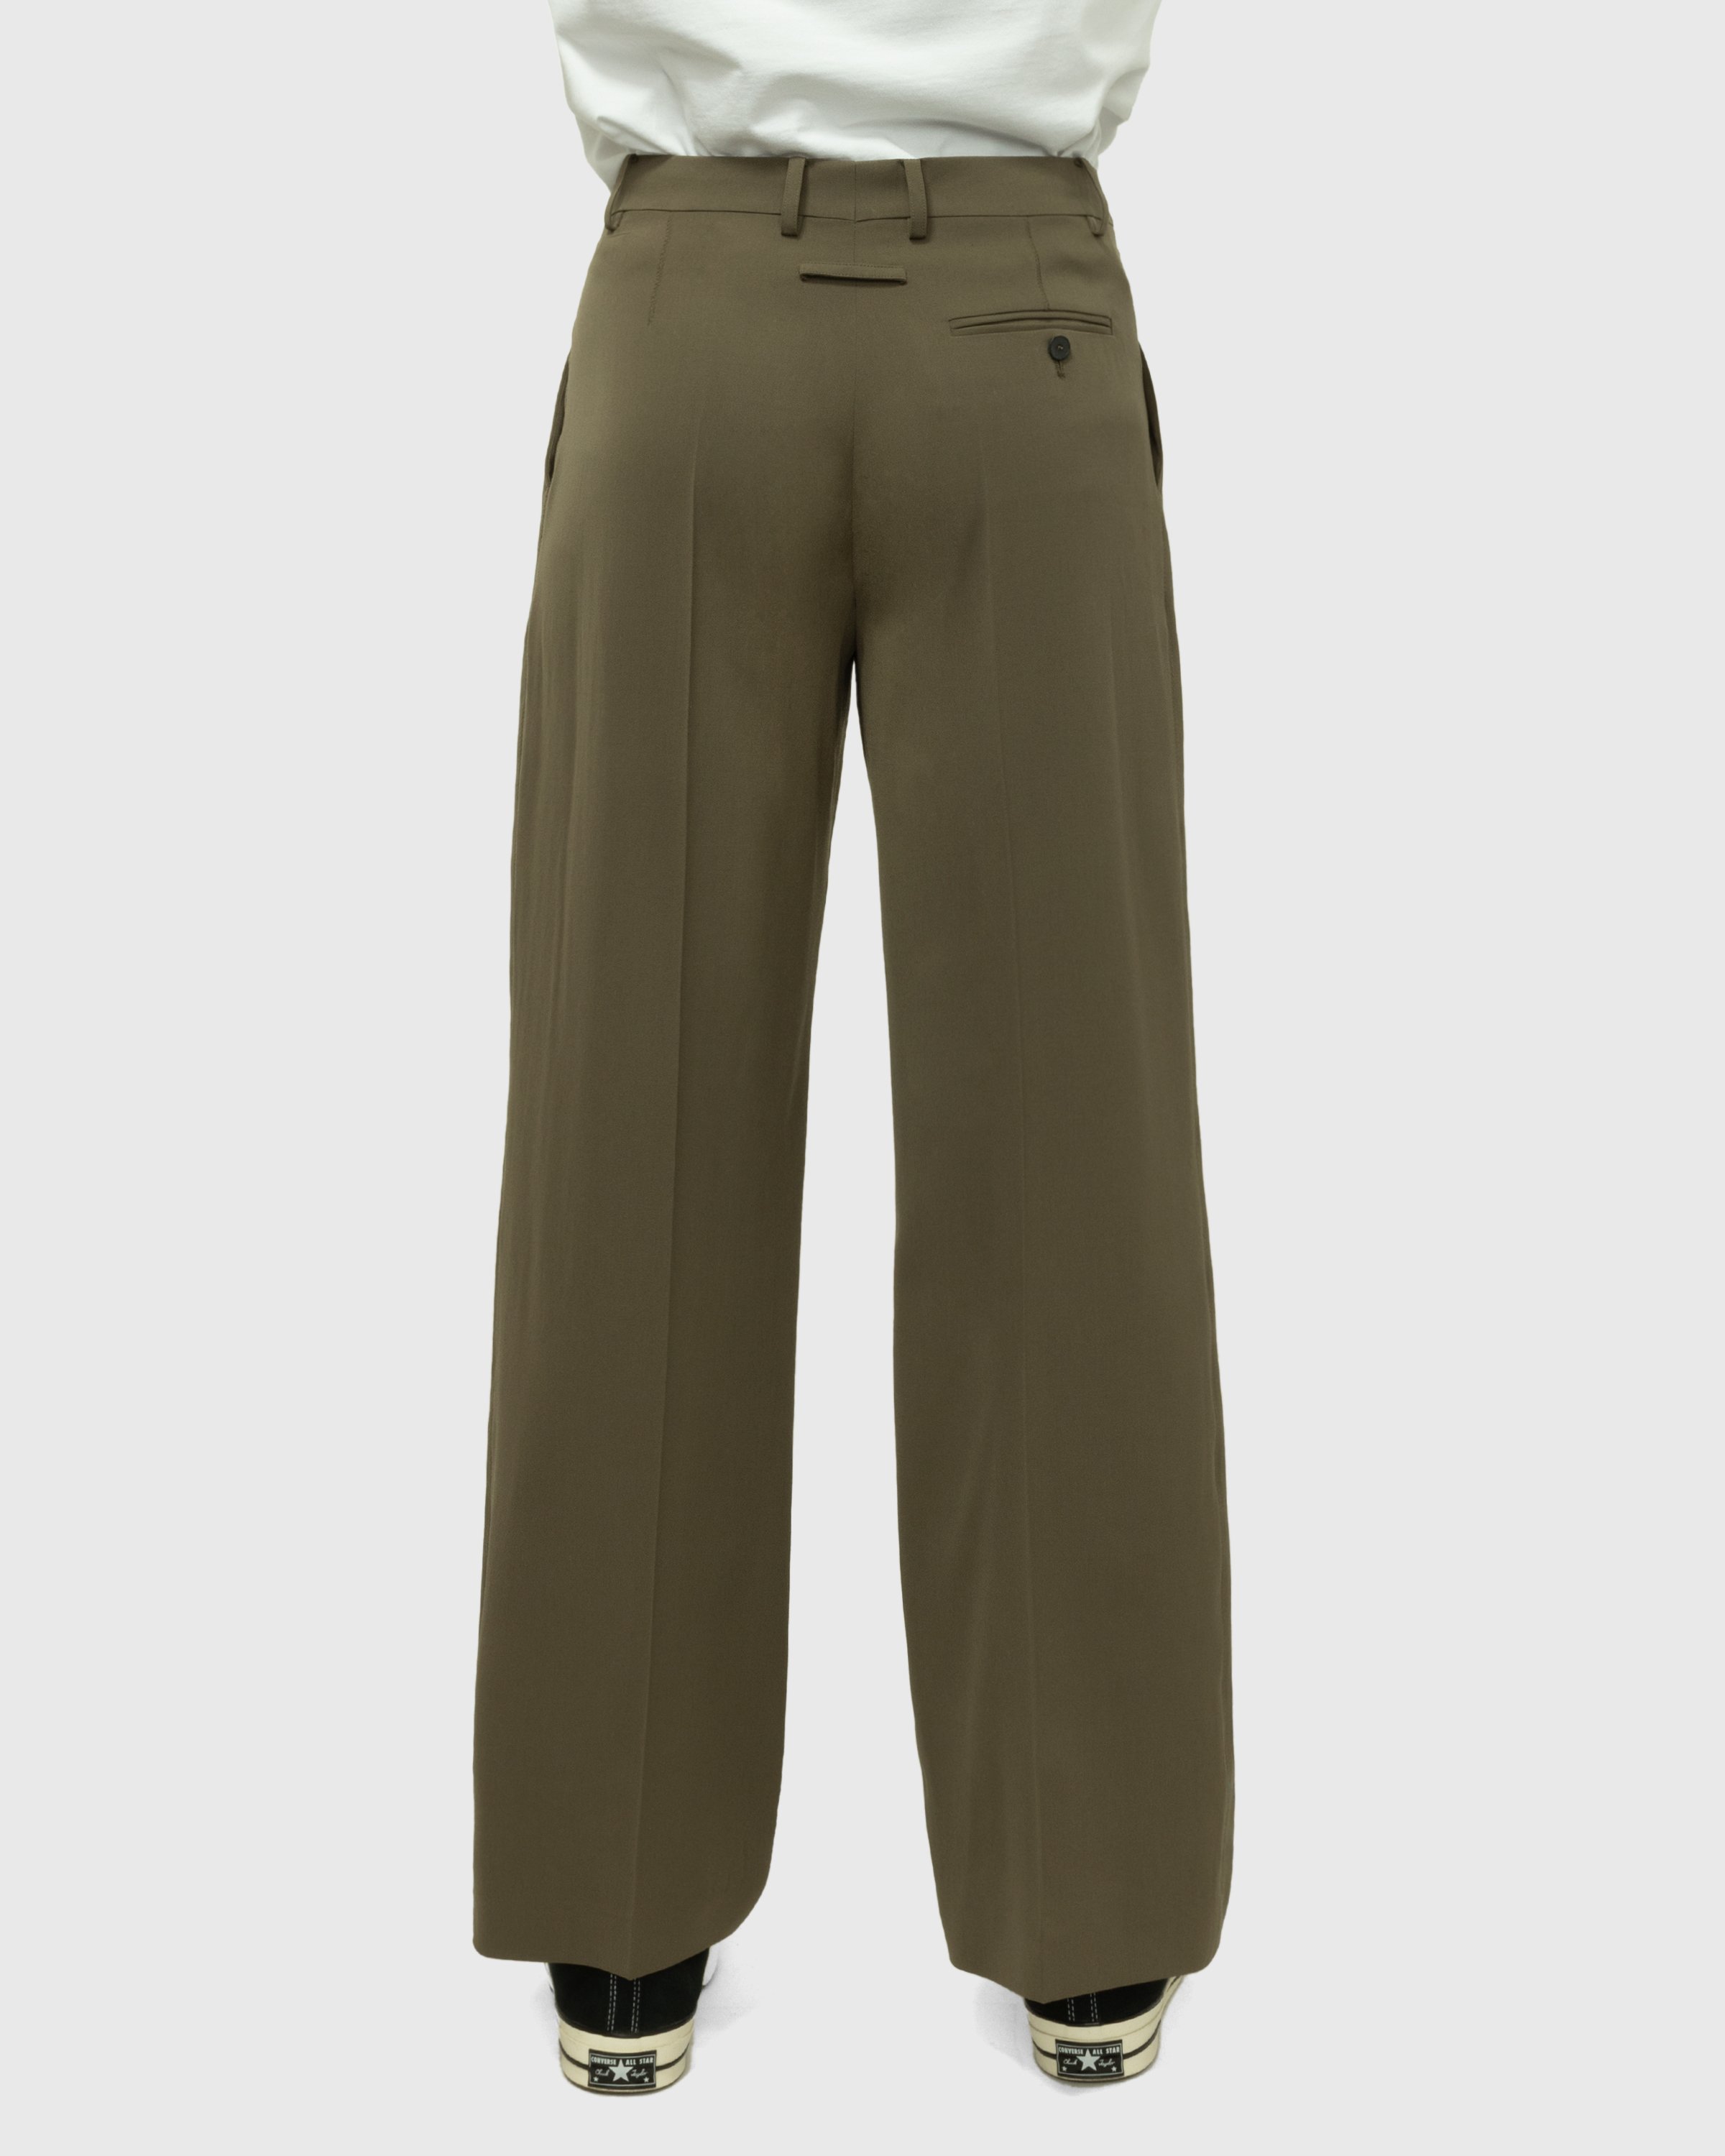 Jean Paul Gaultier - Classic Woven Trouser Khaki - Clothing - Brown - Image 3